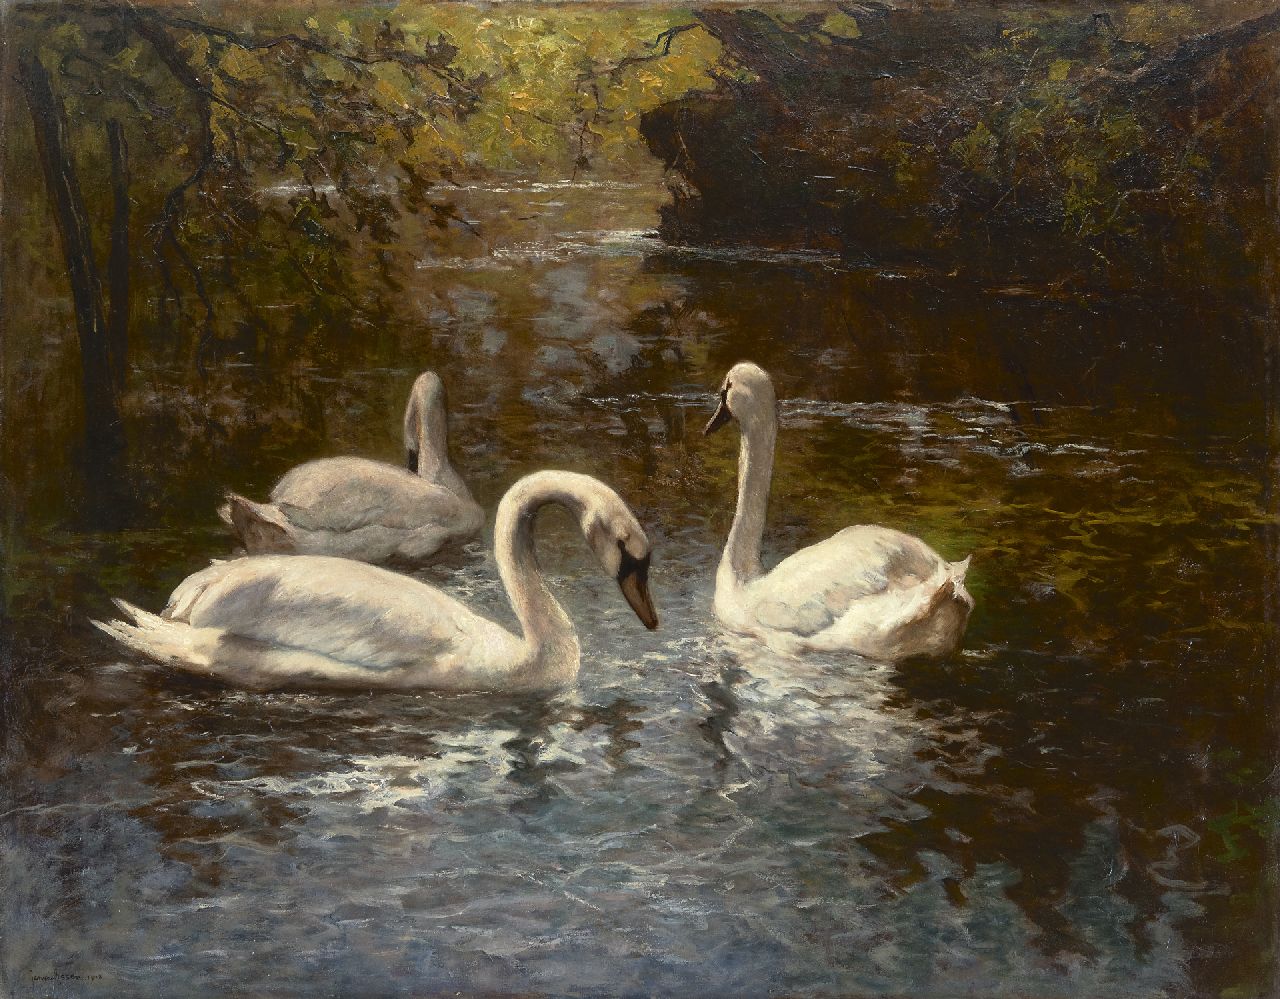 Essen J.C. van | Johannes Cornelis 'Jan' van Essen, White swans, oil on canvas 83.3 x 104.7 cm, signed l.l. and dated 1908